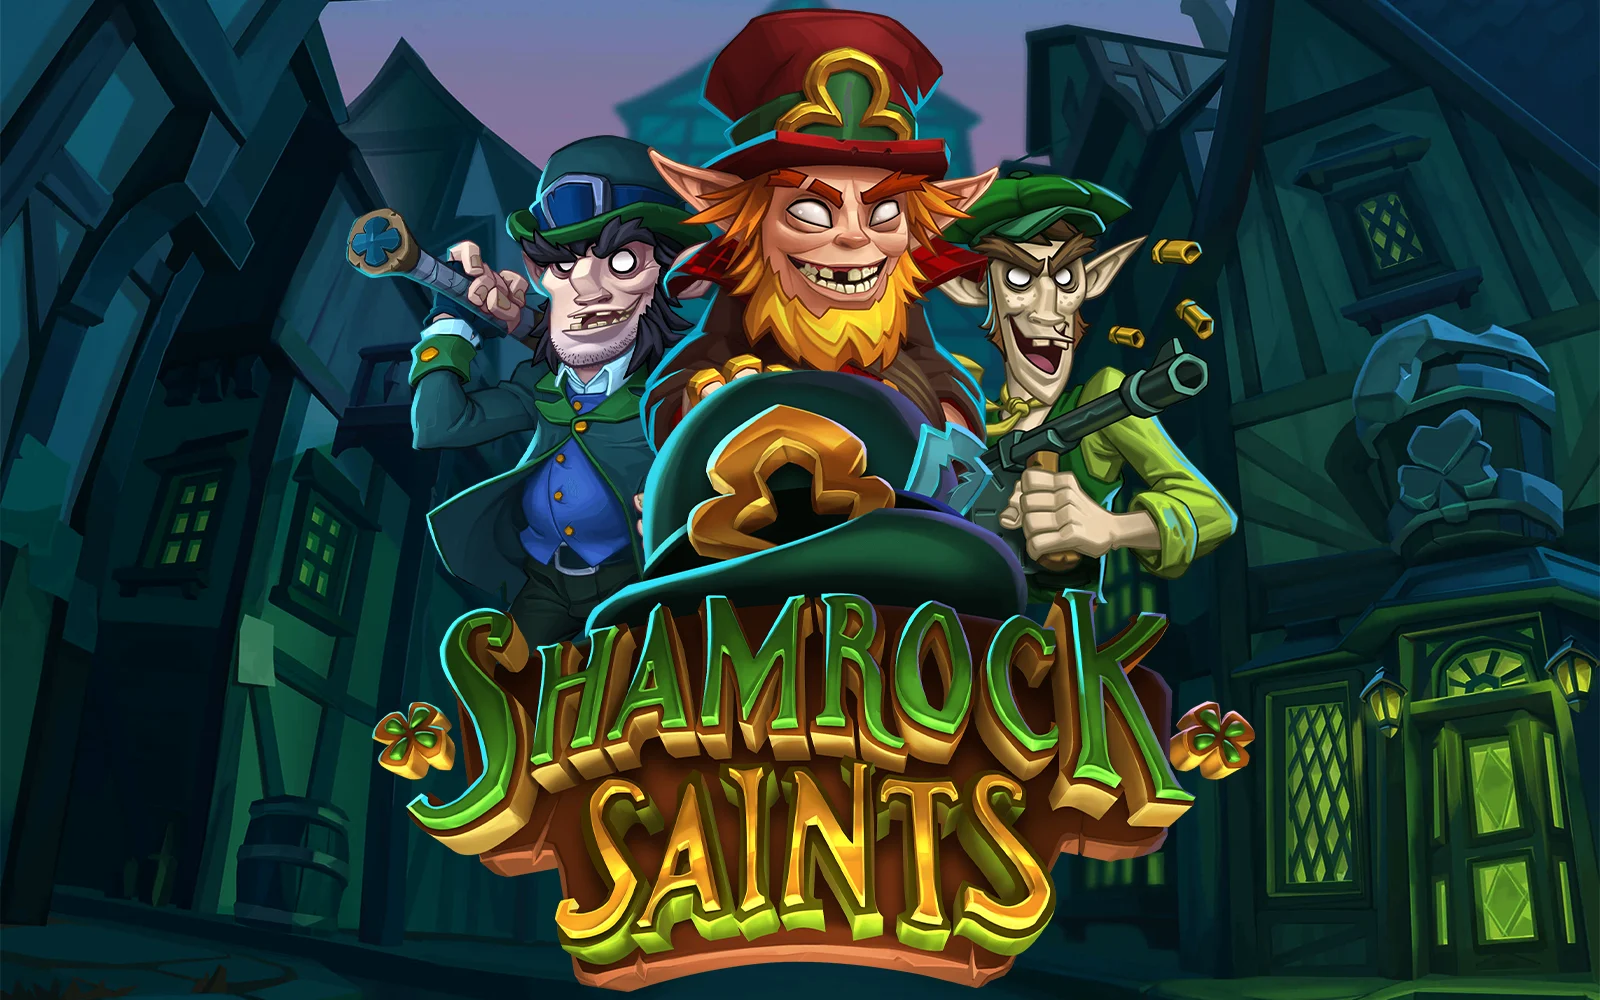 Joacă Shamrock Saints în cazinoul online Starcasino.be